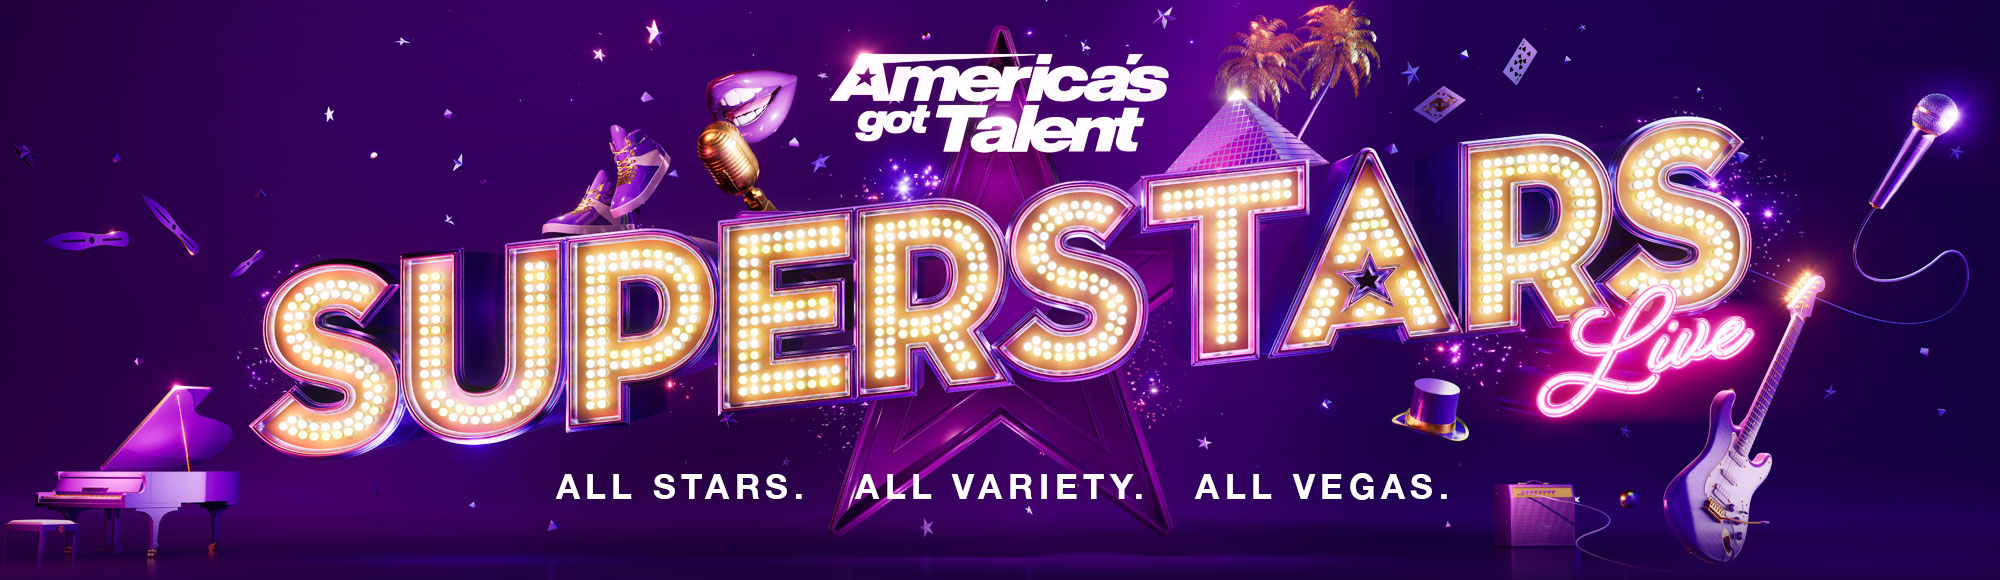 America’s Got Talent Presents Superstars Live! show